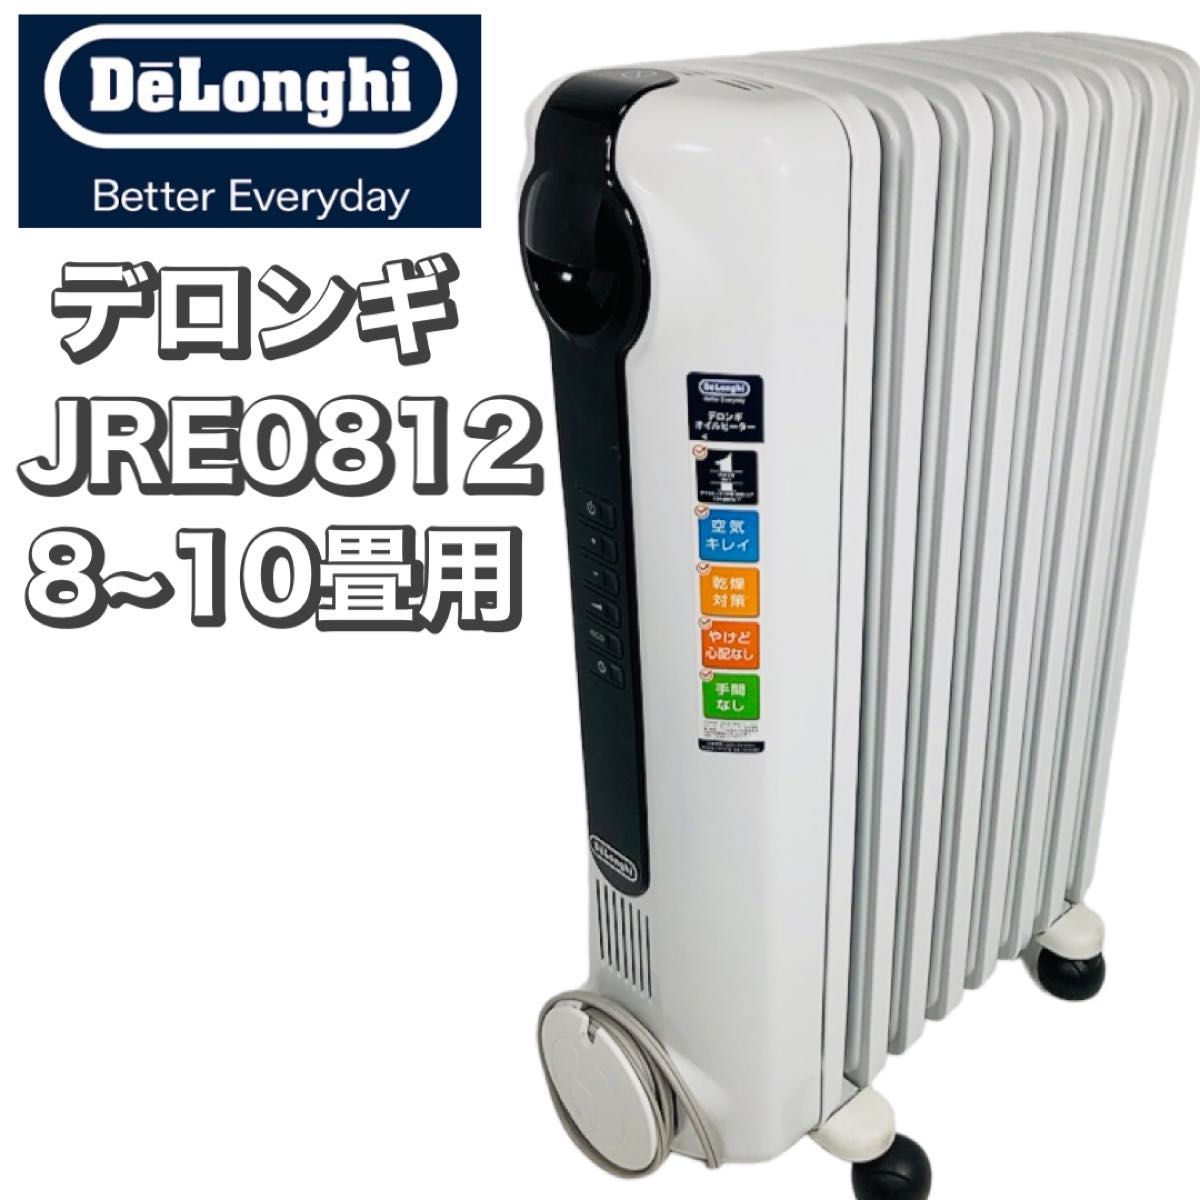 DeLonghi デロンギ オイルヒーター JRE 暖房器具 マイコン制御